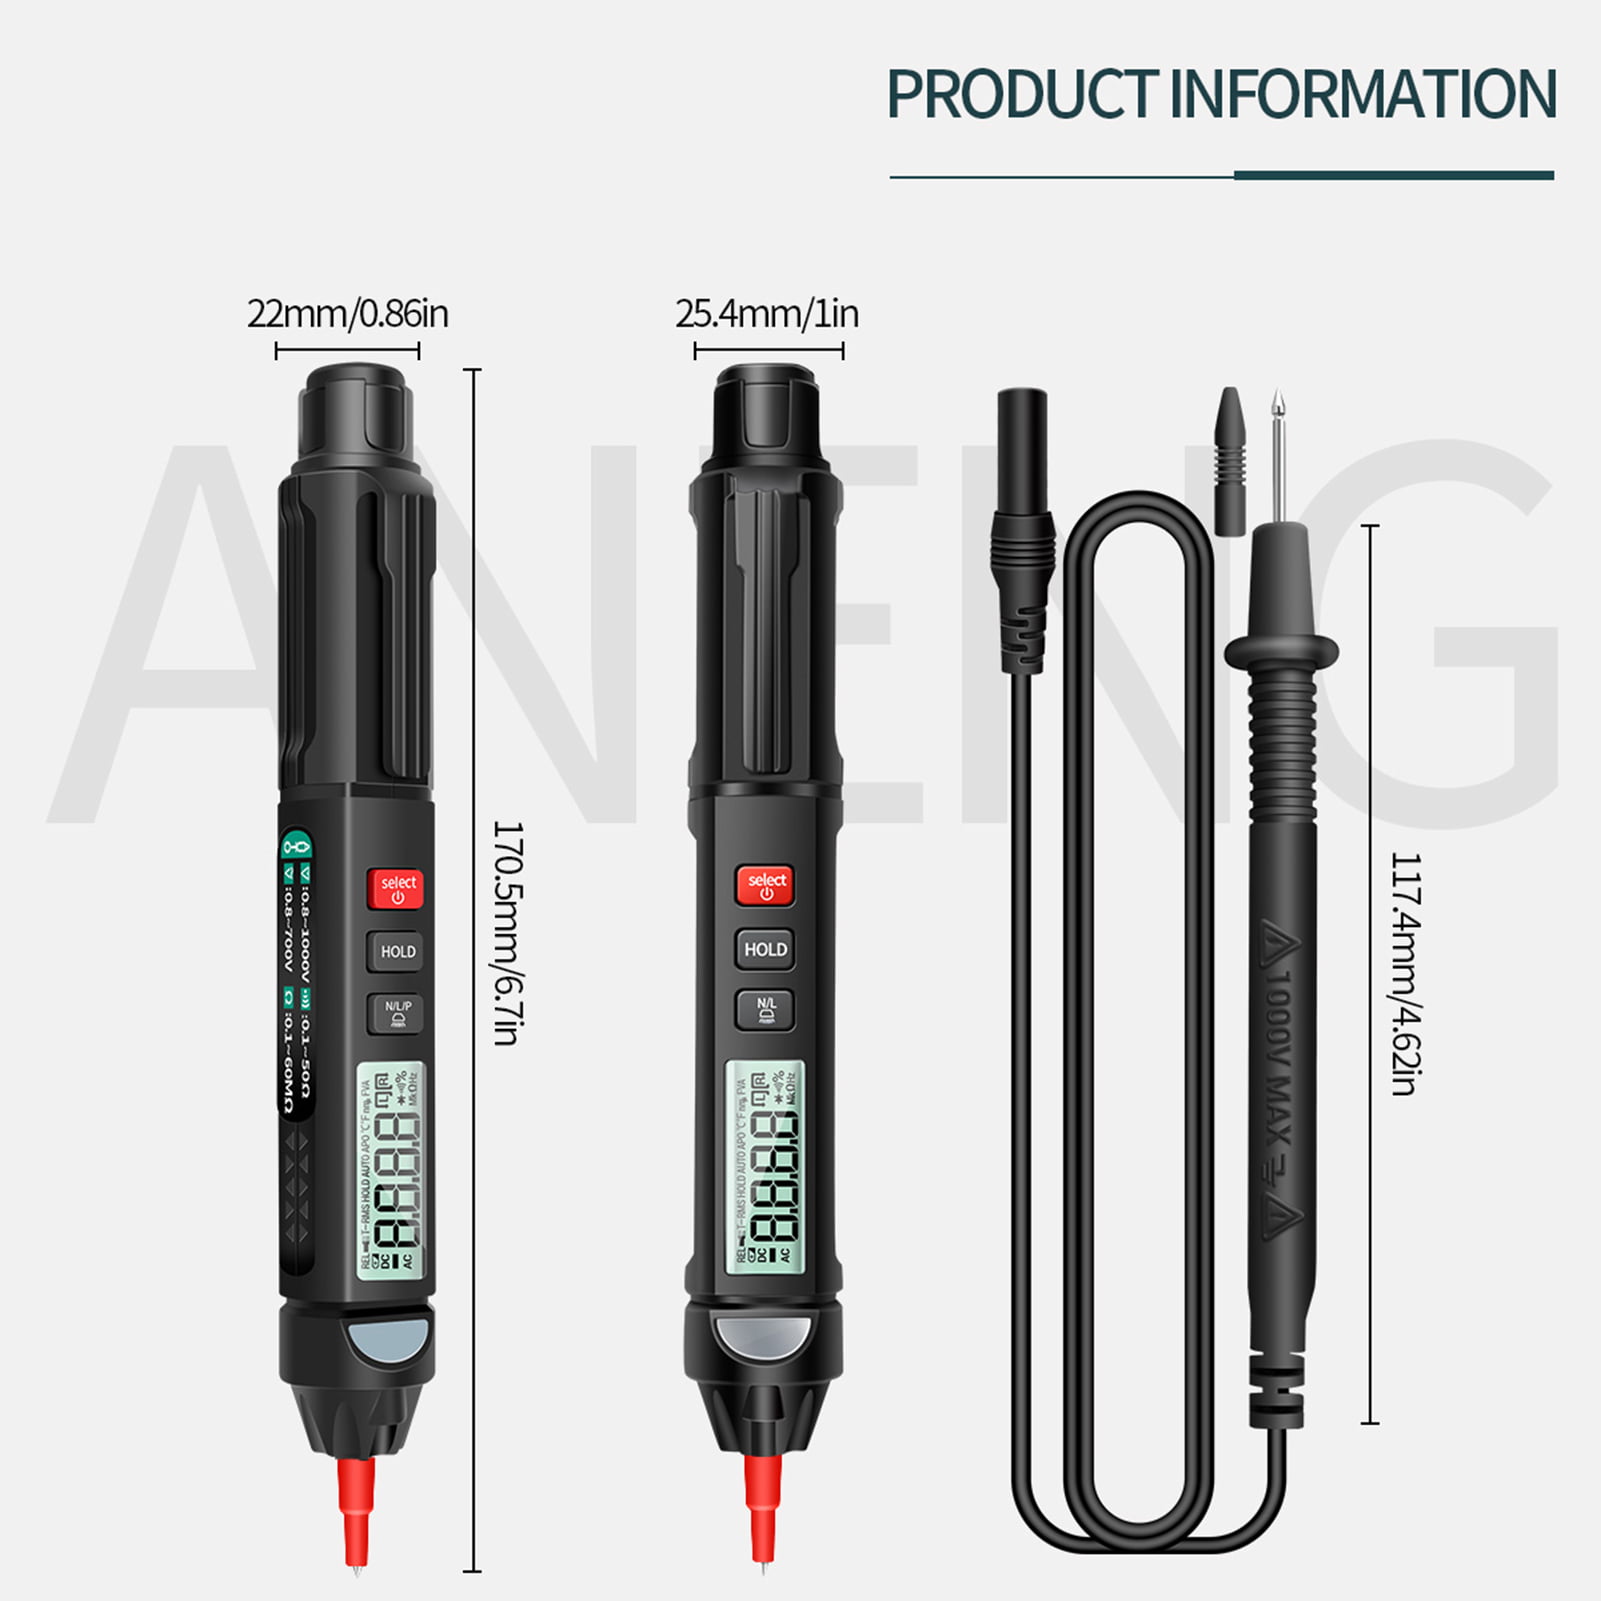 Auto Rang Meter Digital Pen Type Multimeter Tester 6000 Counts LCD Display 